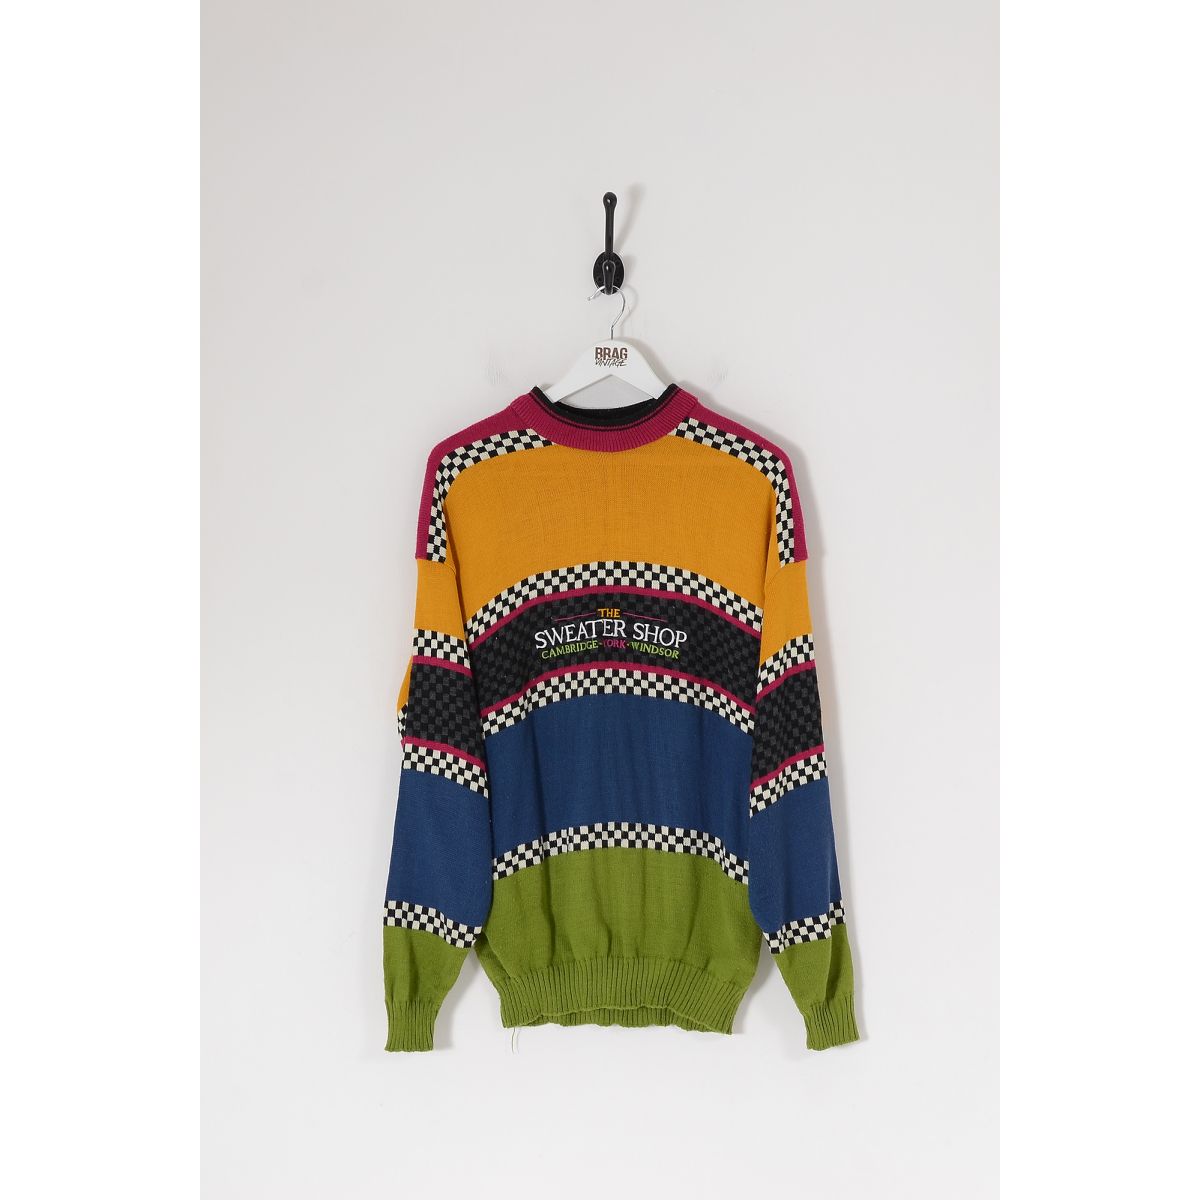 Vintage The Sweater Shop Patterned Knit Jumper Multicolour XL